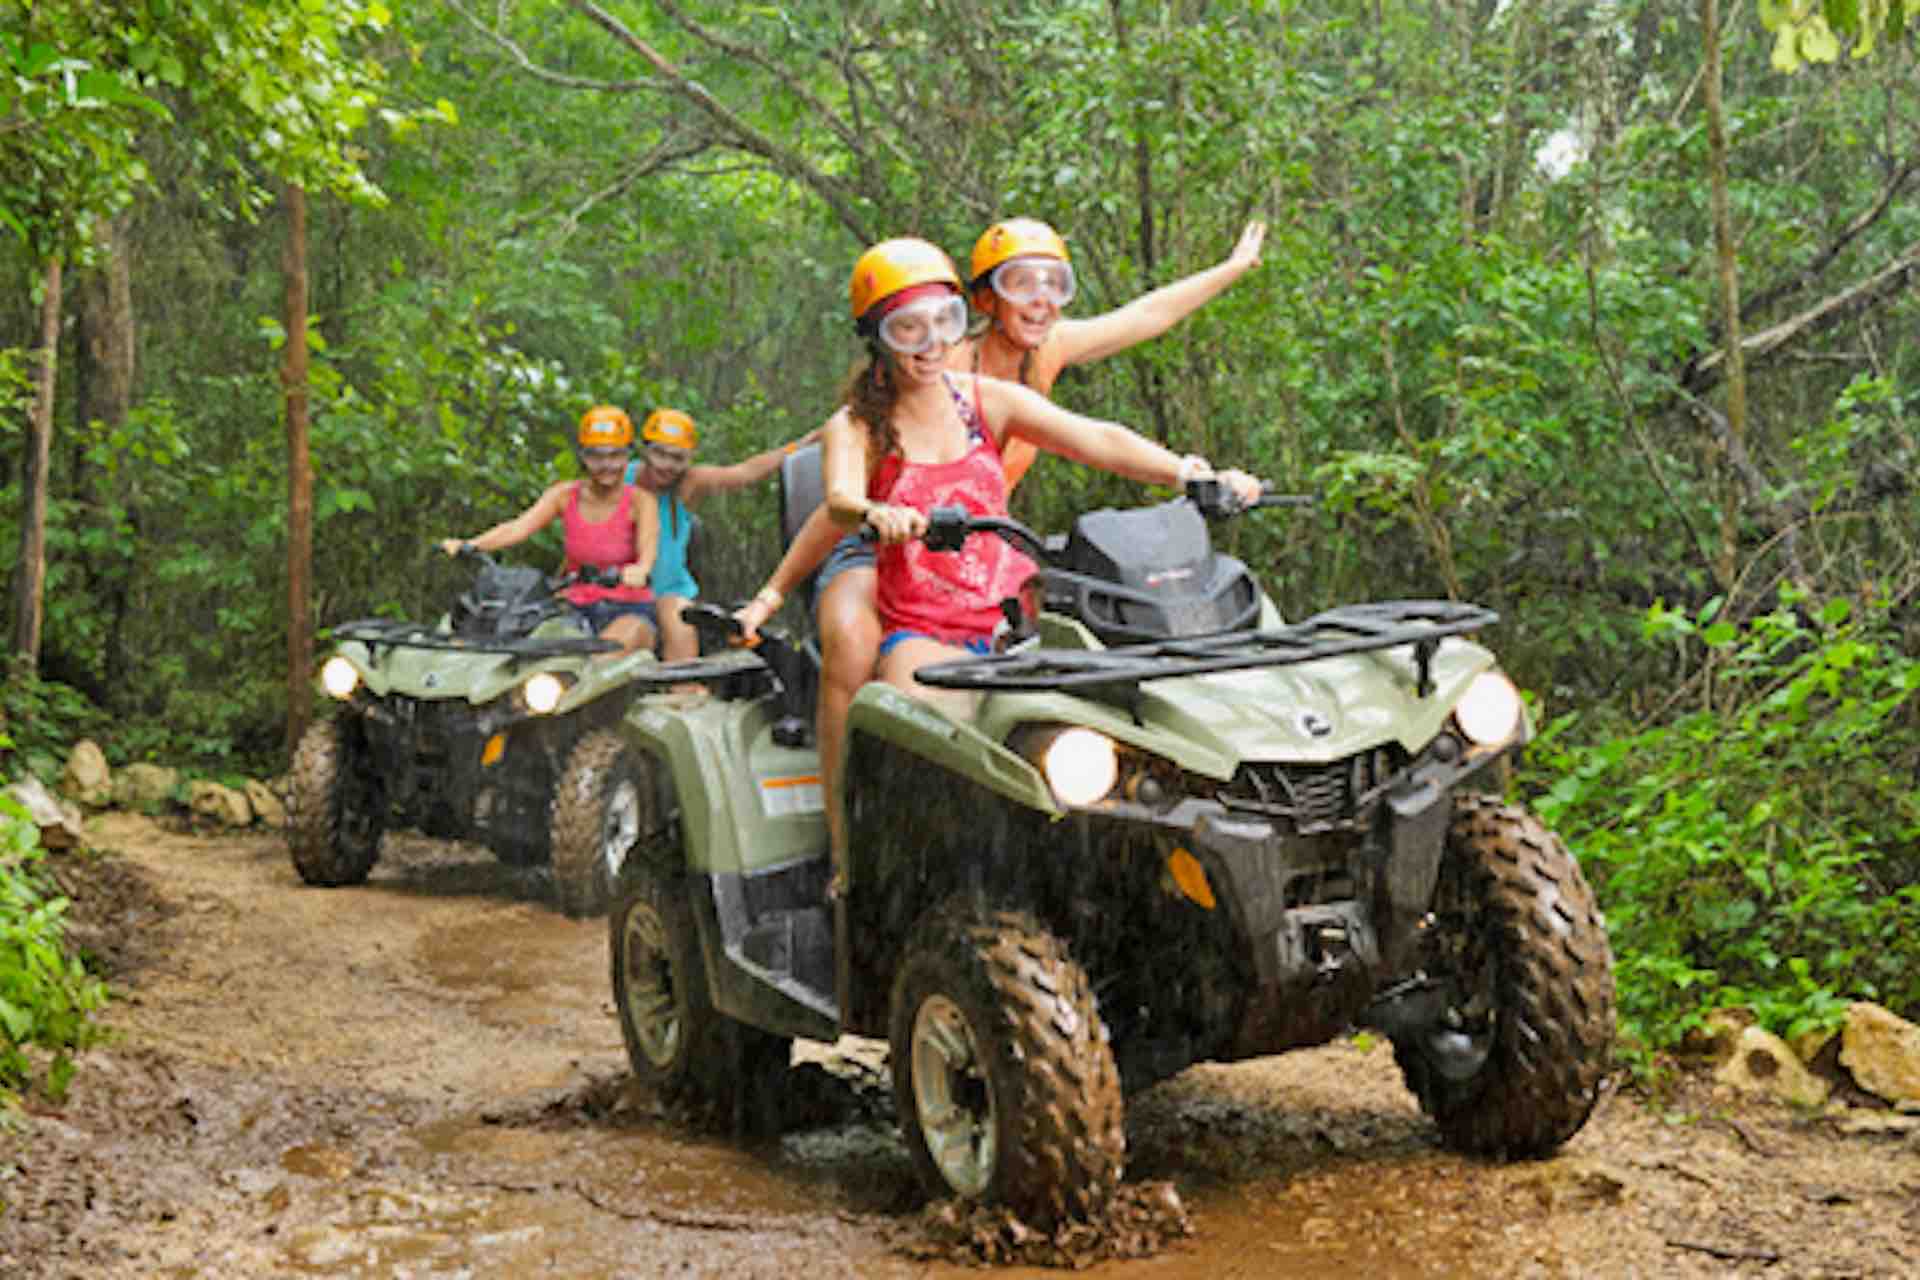 ATV Playa del Carmen Secret Caves tour guests in jungle